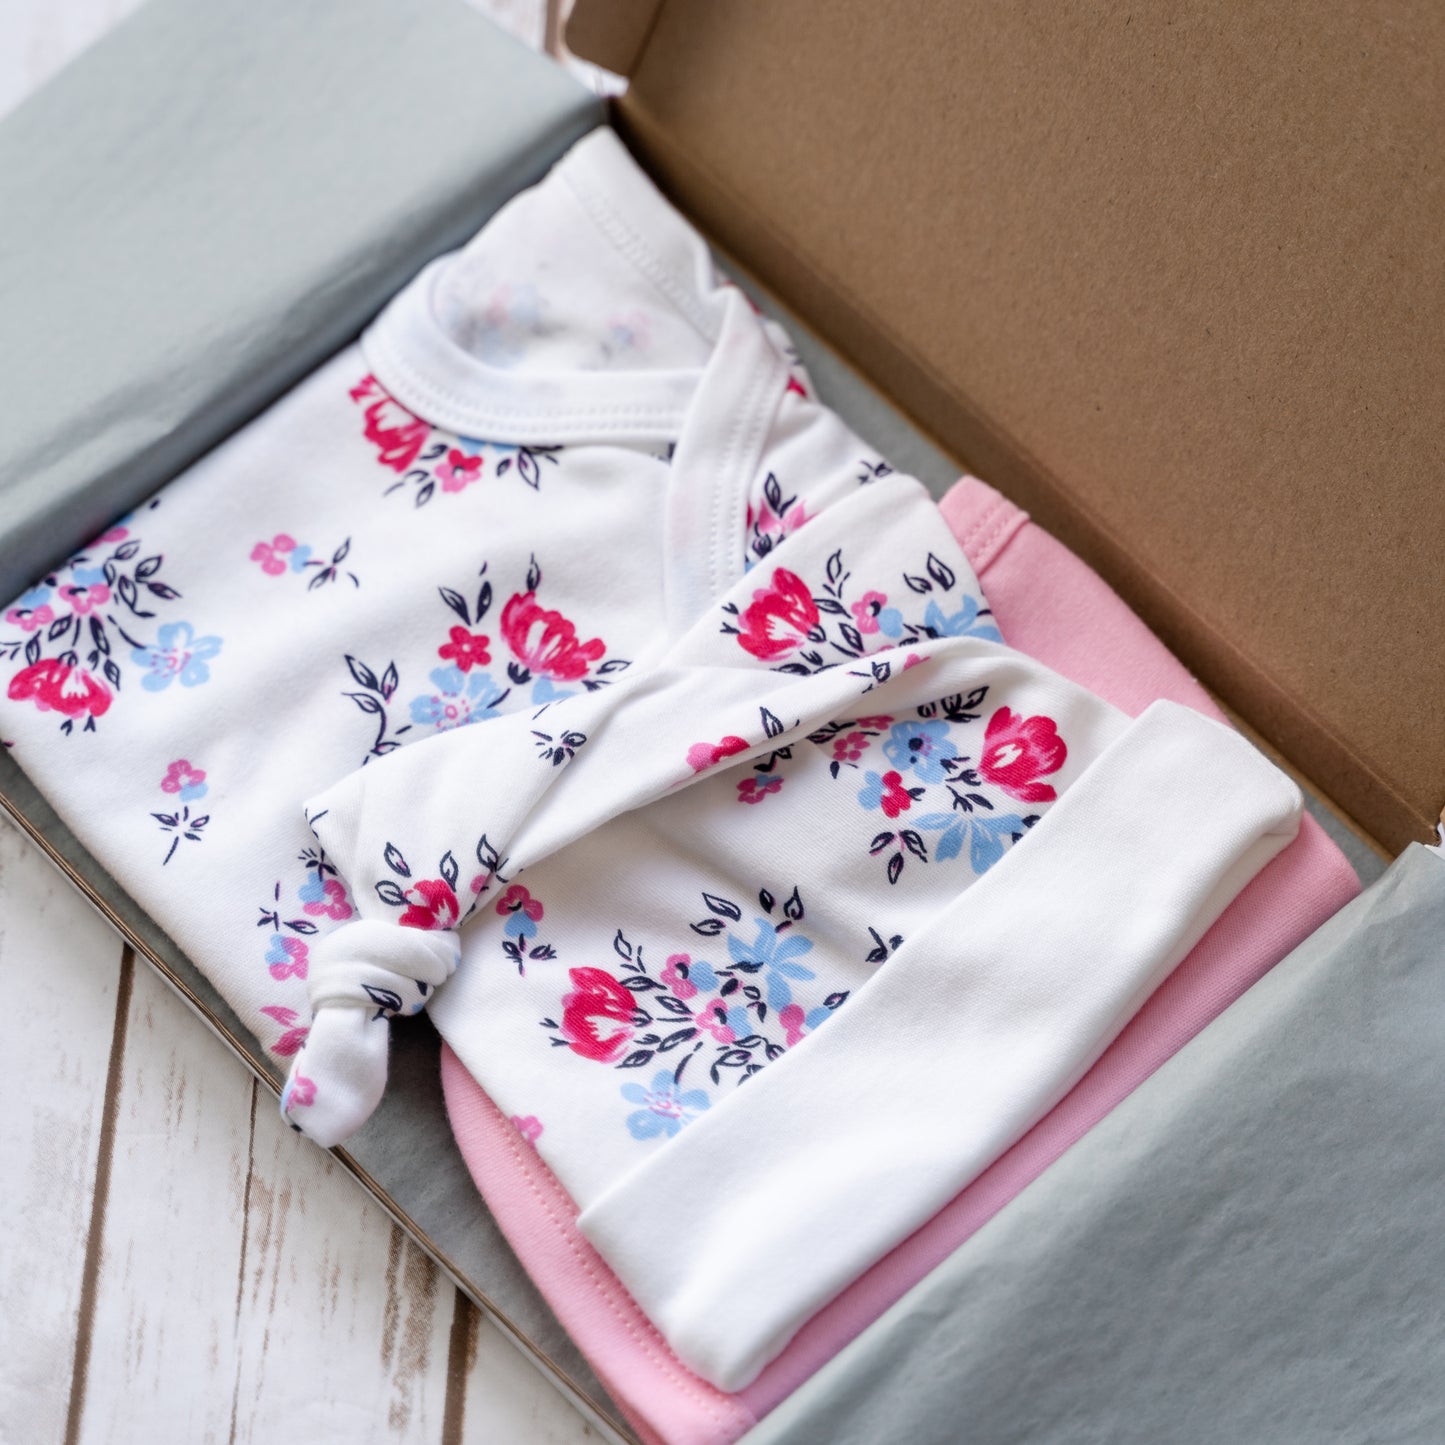 Newborn Floral Letterbox Set - Hat, Vest, Bib (Pink/Blue/White Floral)